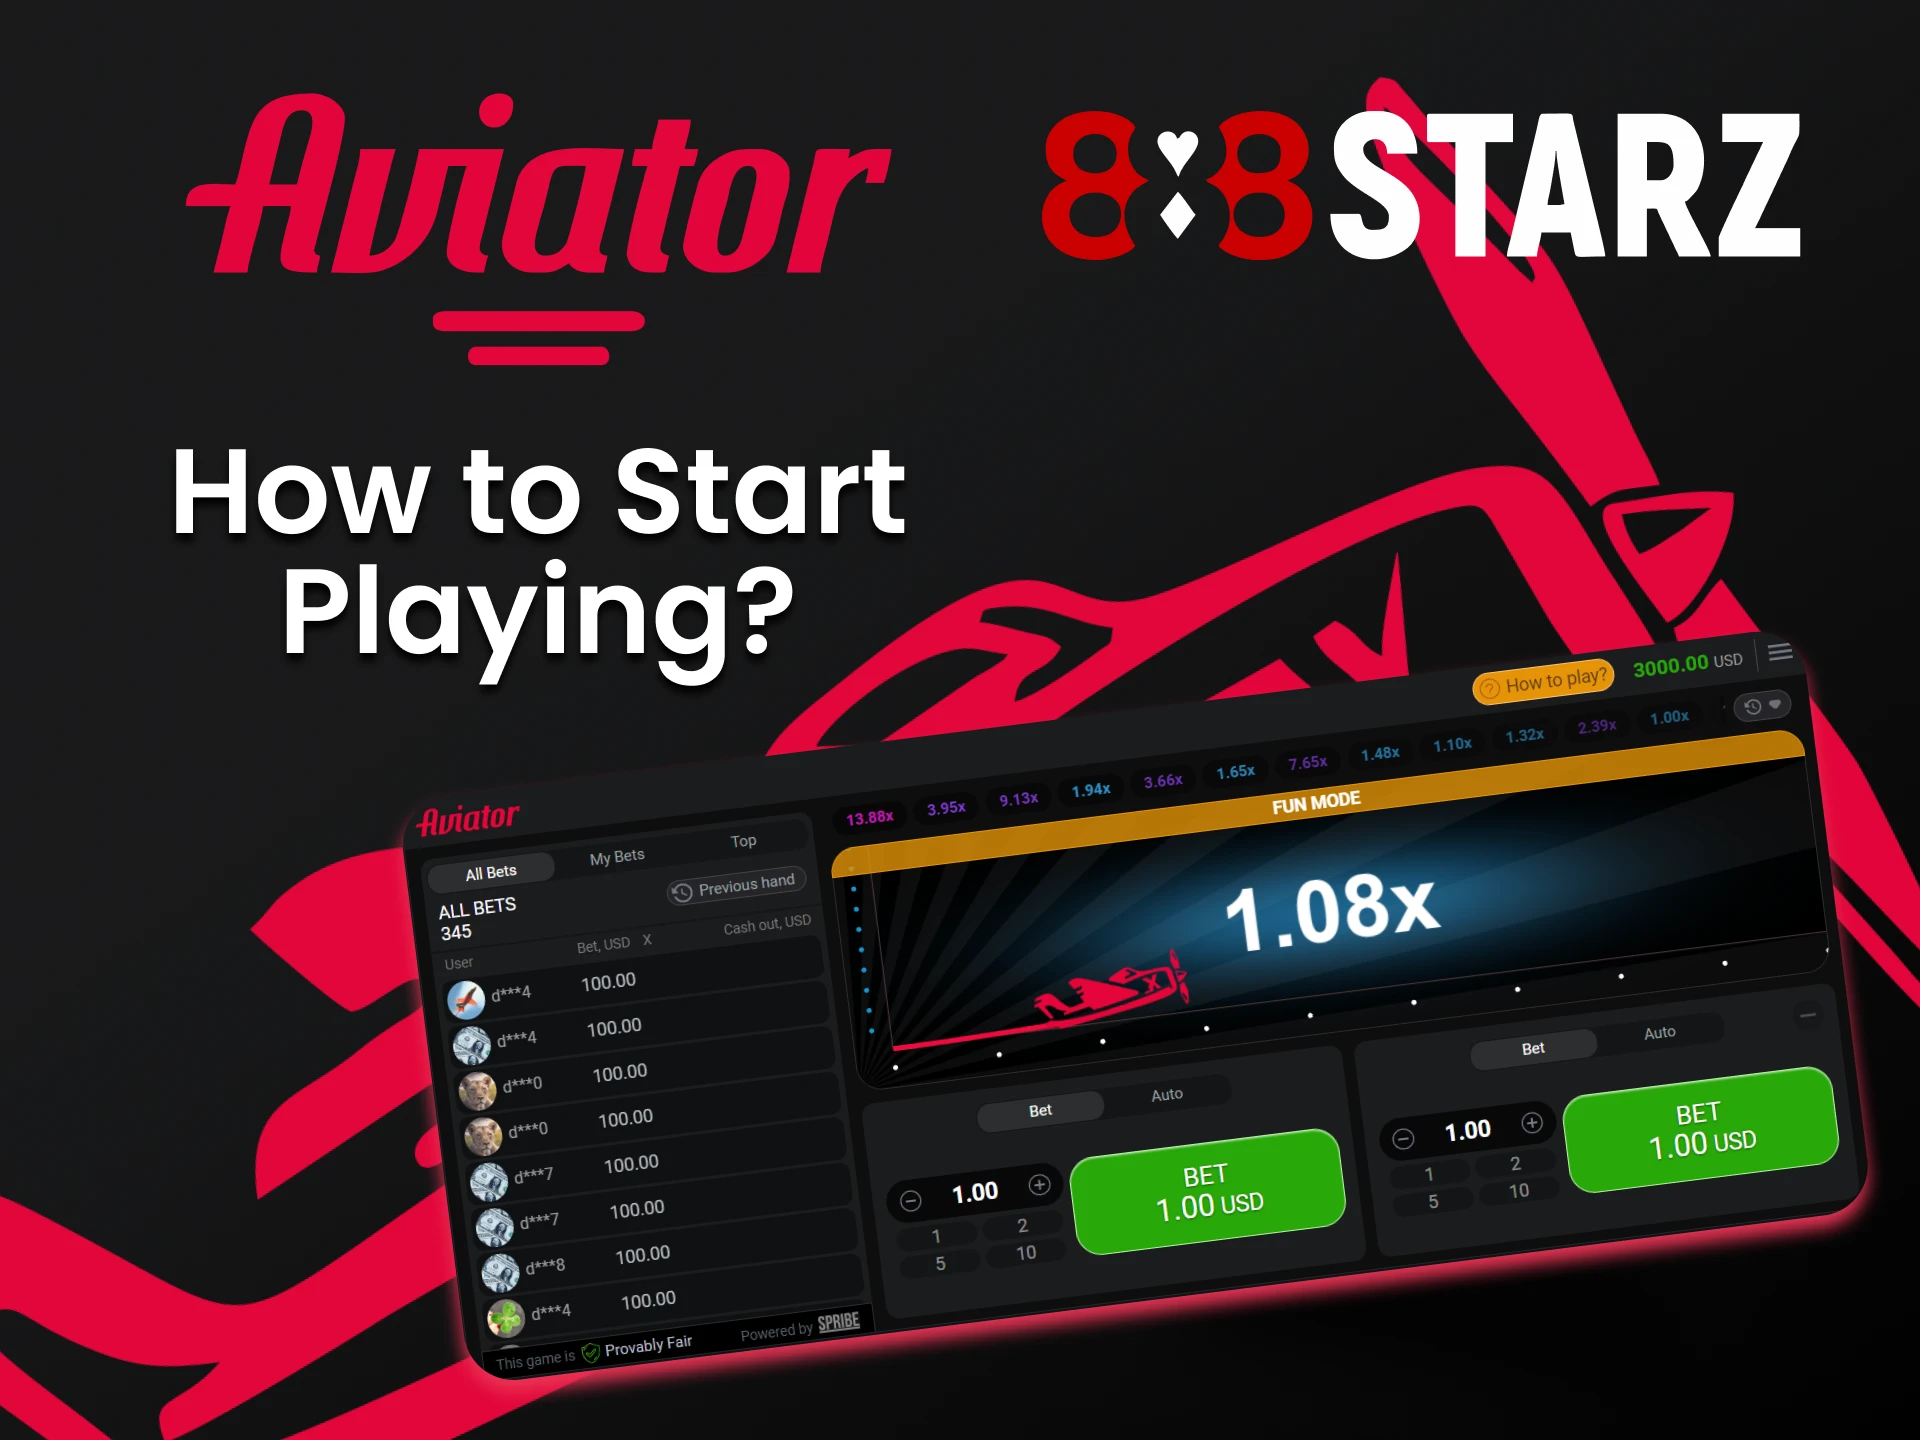 It's very easy to start playing Aviator on 888starz.